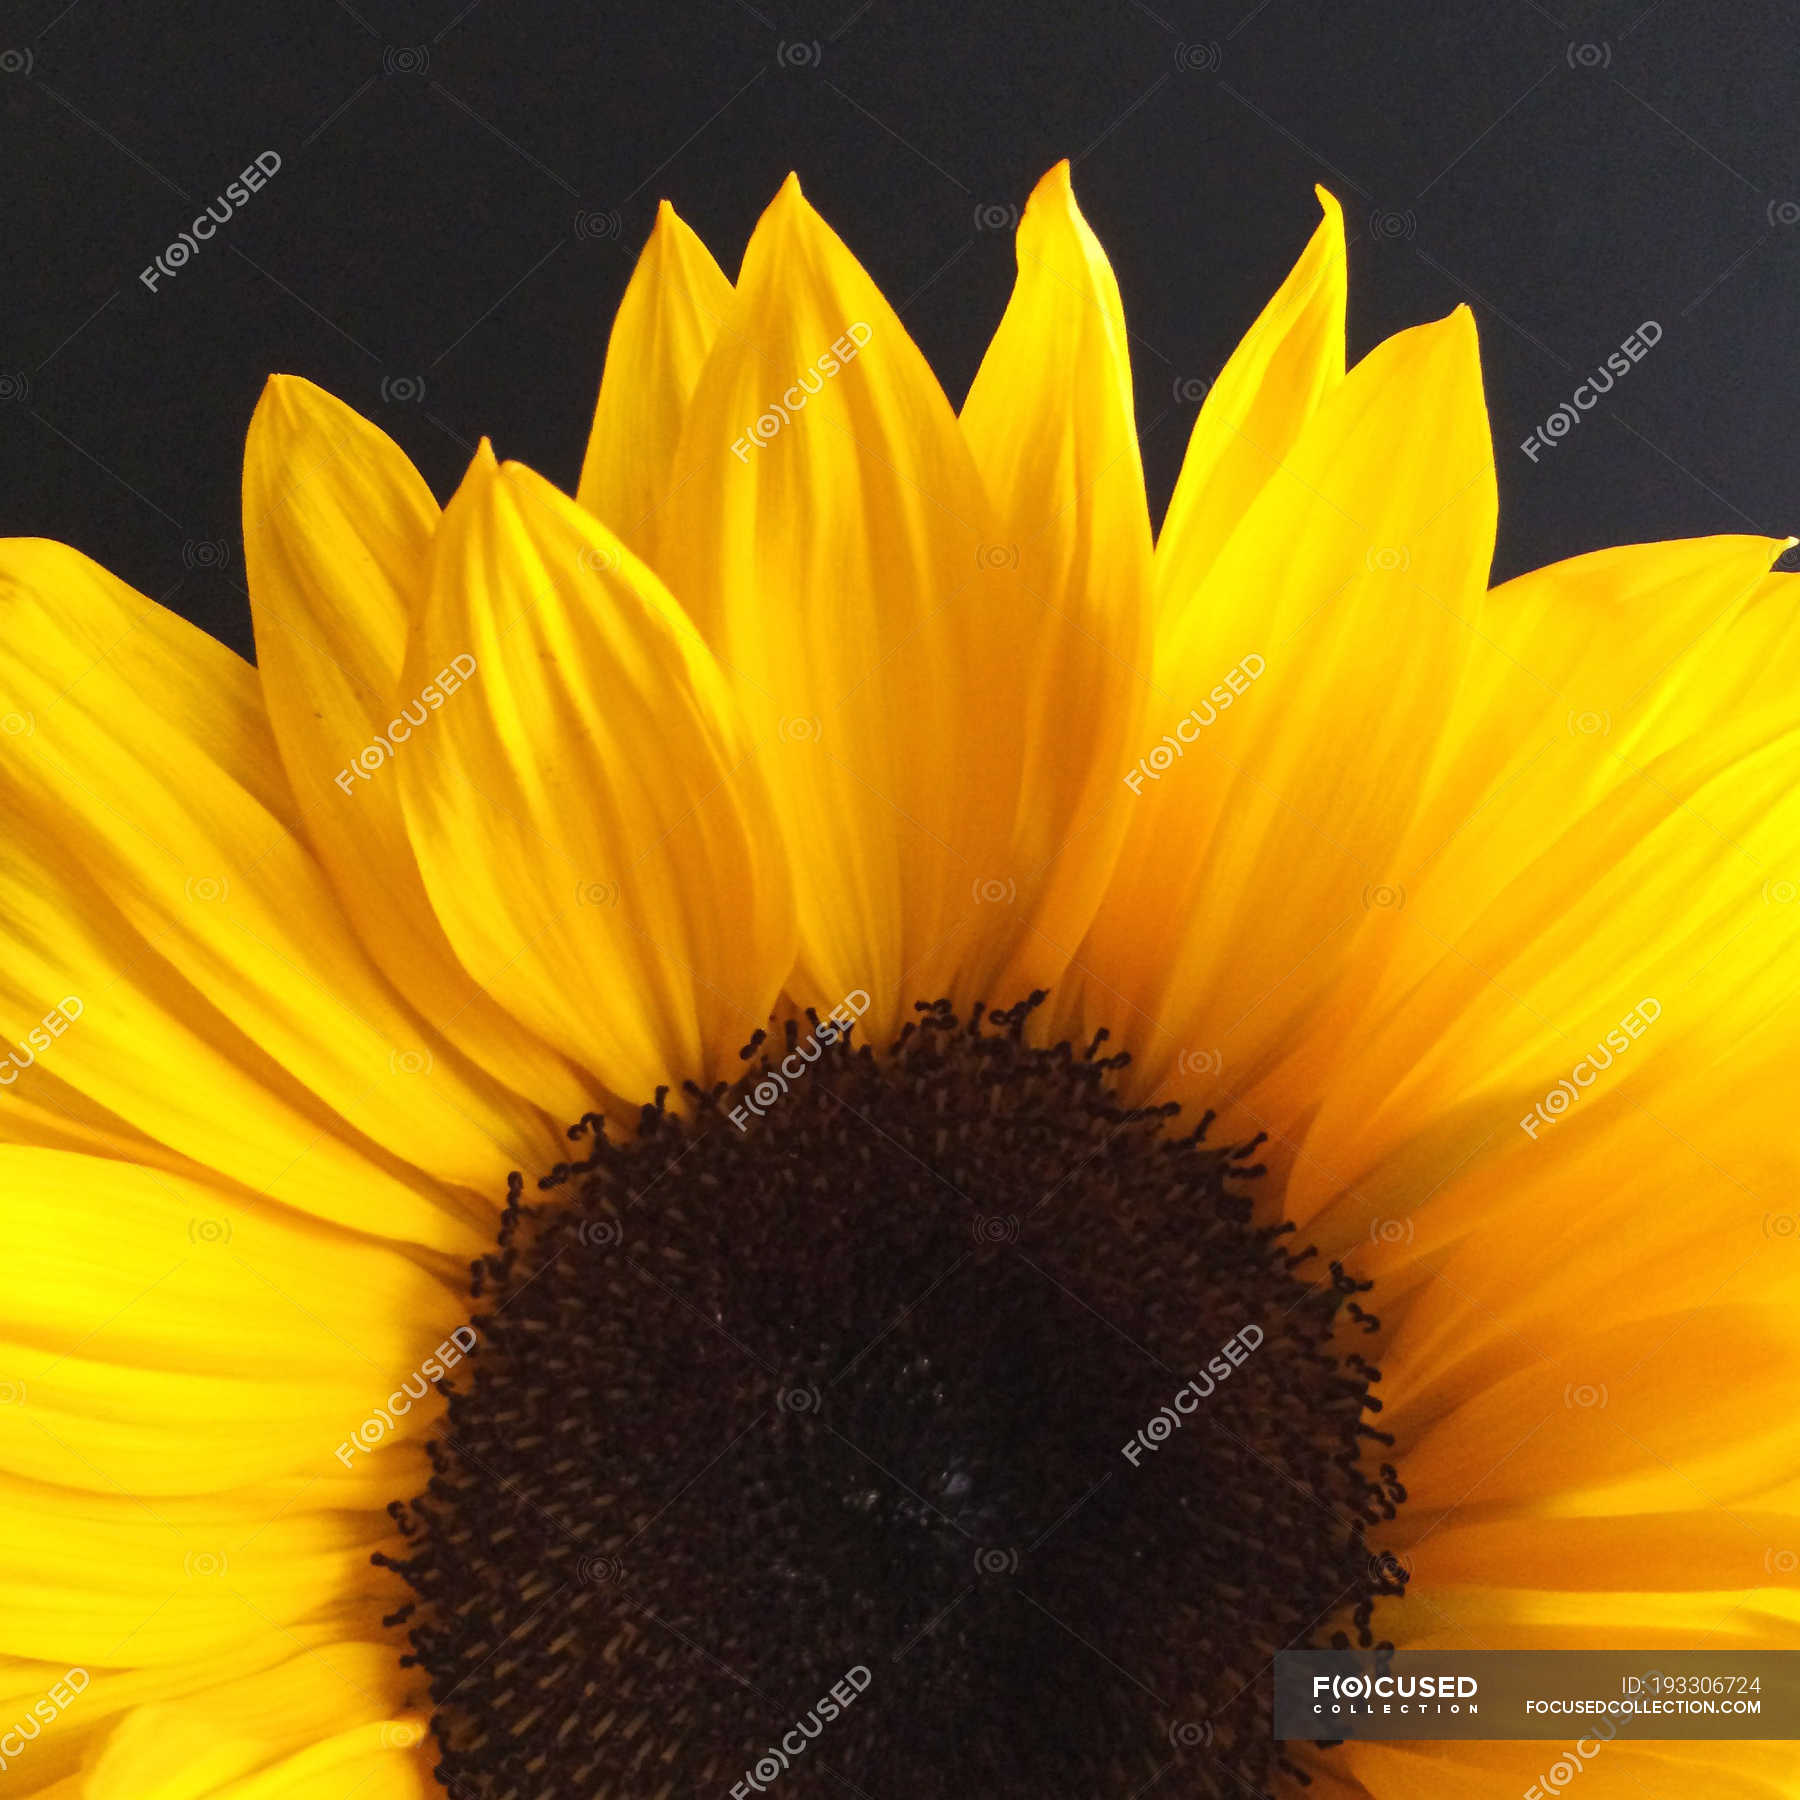 Close-up of fresh yellow sunflower on black background — environmental,  elegant - Stock Photo | #193306724